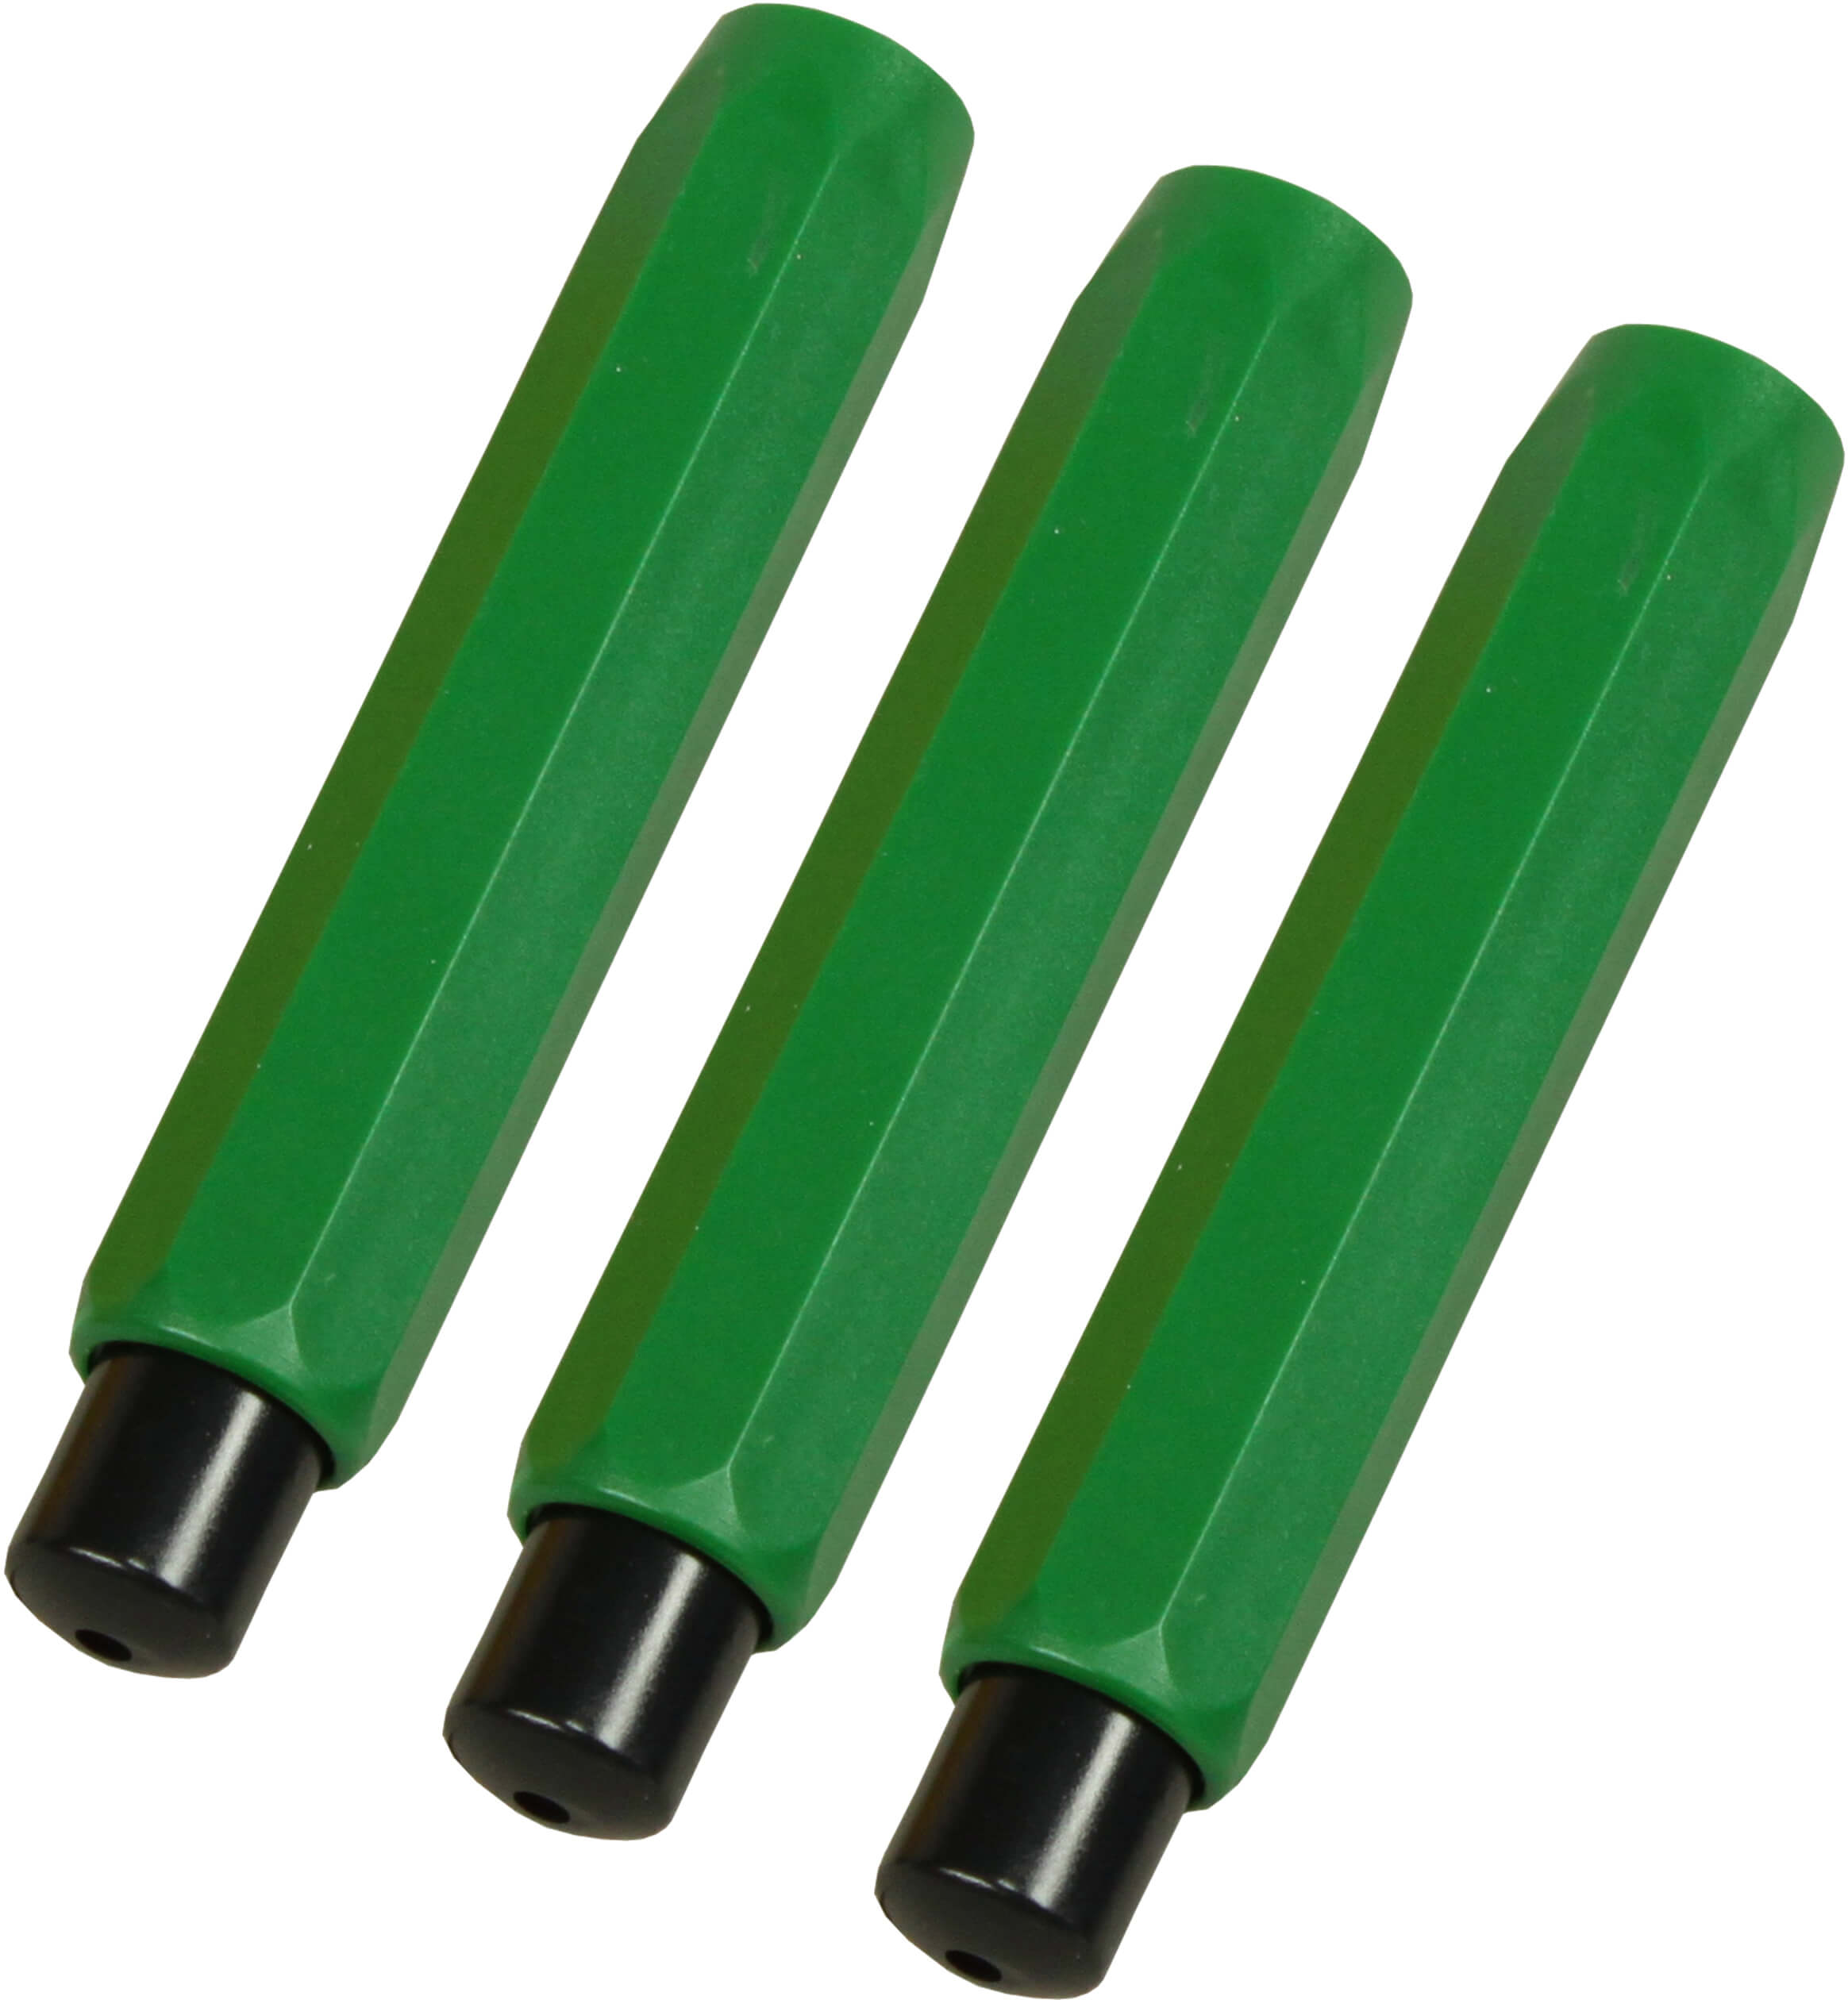 Kreidehalter für Robercolorkreide grün sofort lieferbar | Bestnr. RC1050-GR